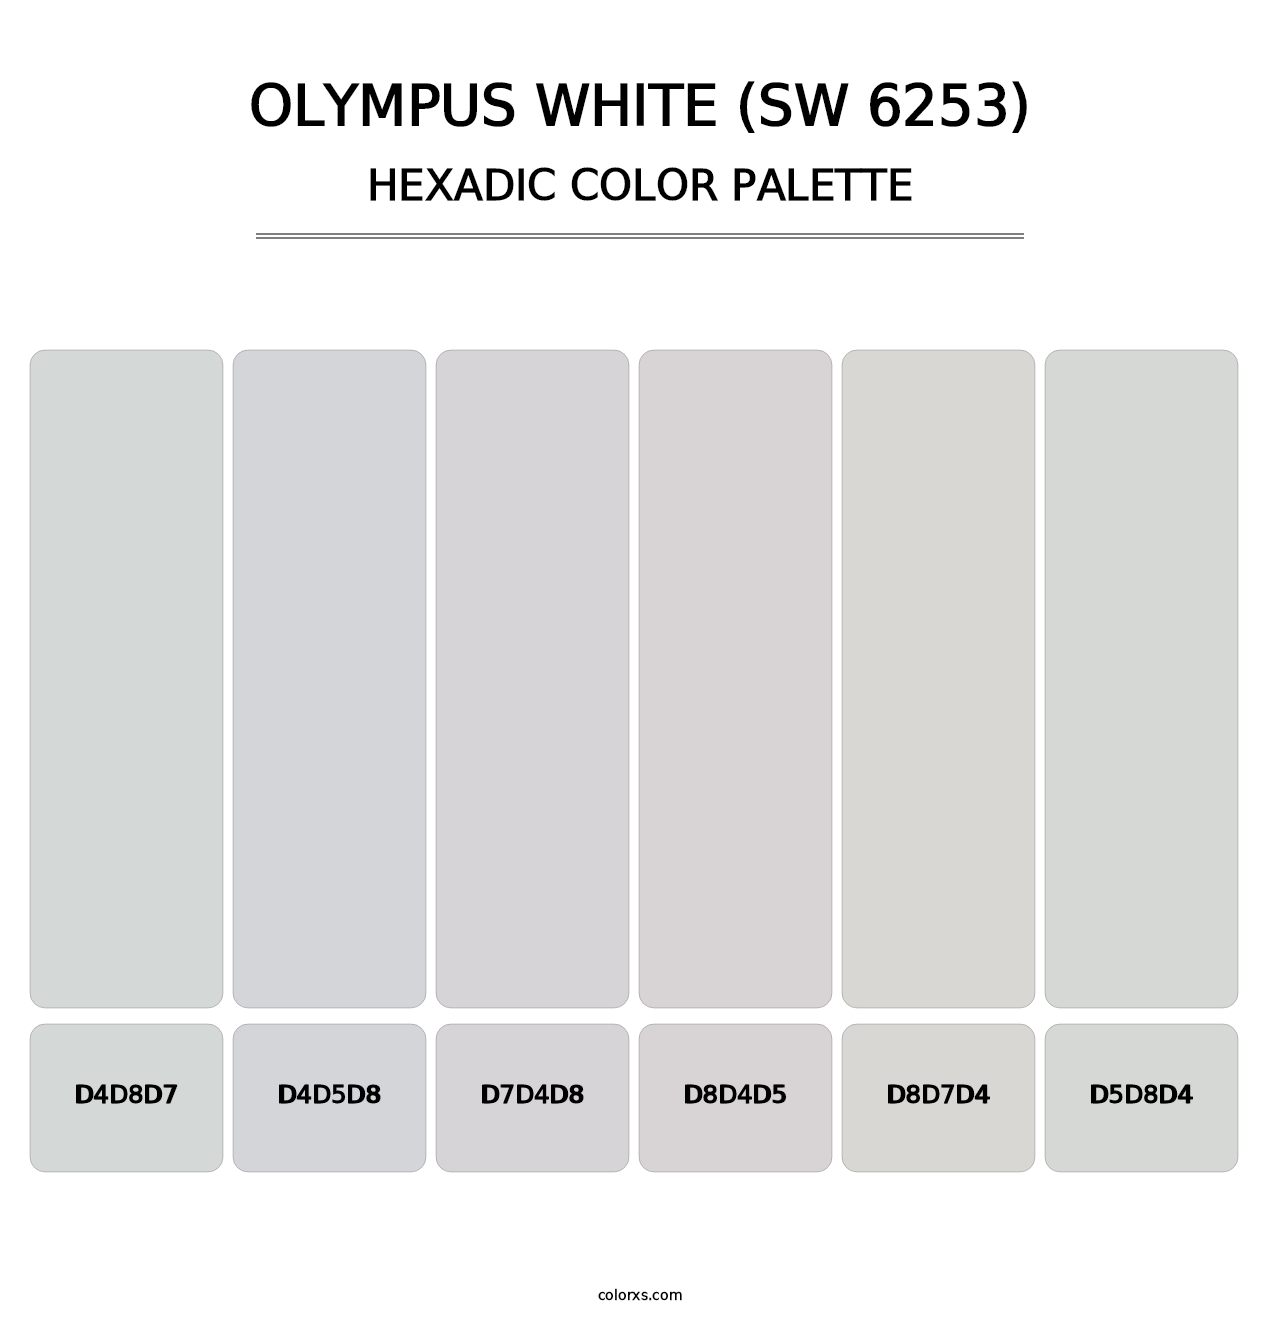 Olympus White (SW 6253) - Hexadic Color Palette